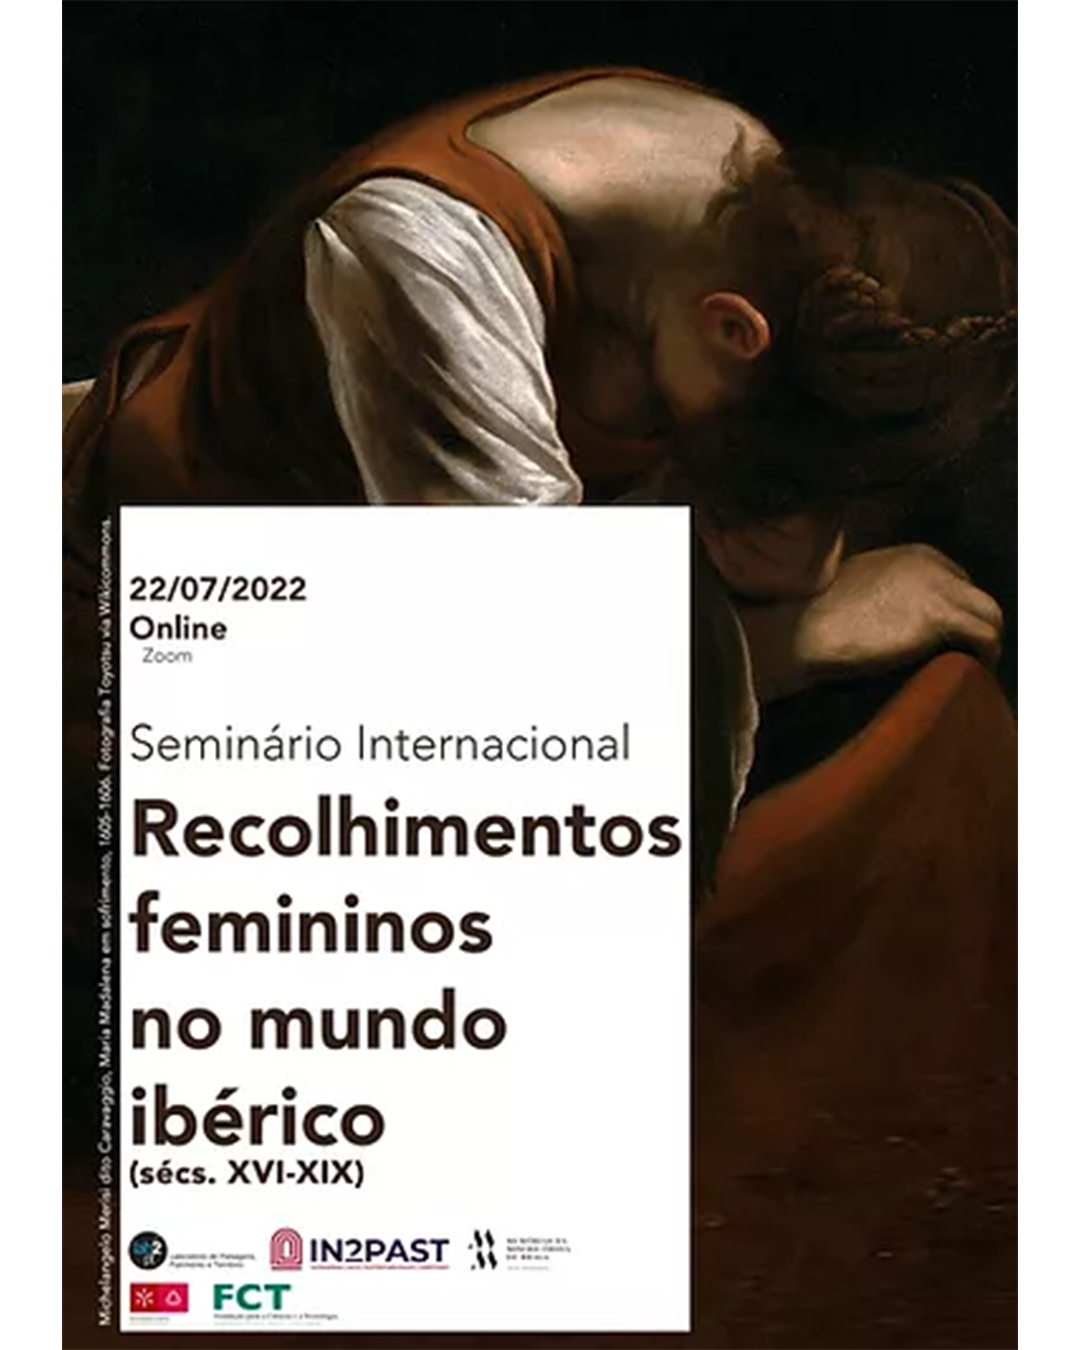 Seminário Internacional "Recolhimentos femininos no mundo ibérico (séculos XVI-XIX)" image